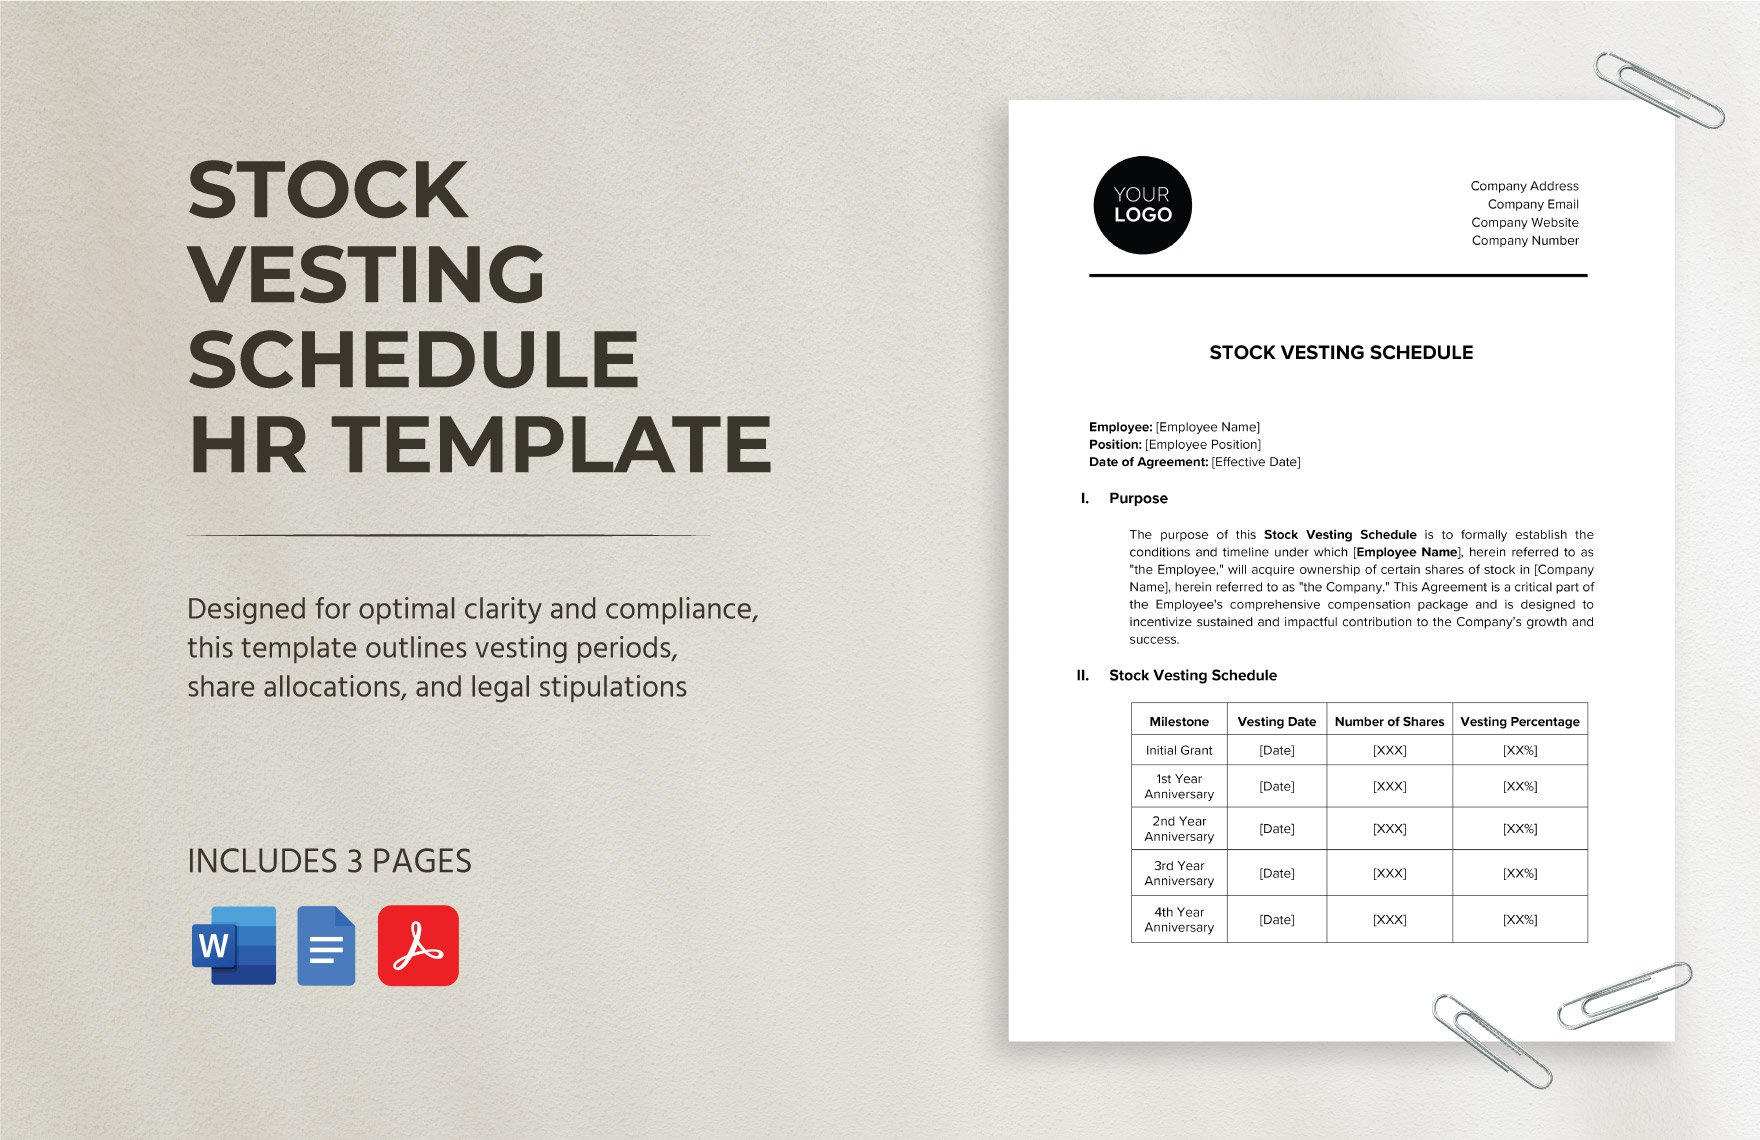 Stock Vesting Schedule HR Template in Word, Google Docs, PDF